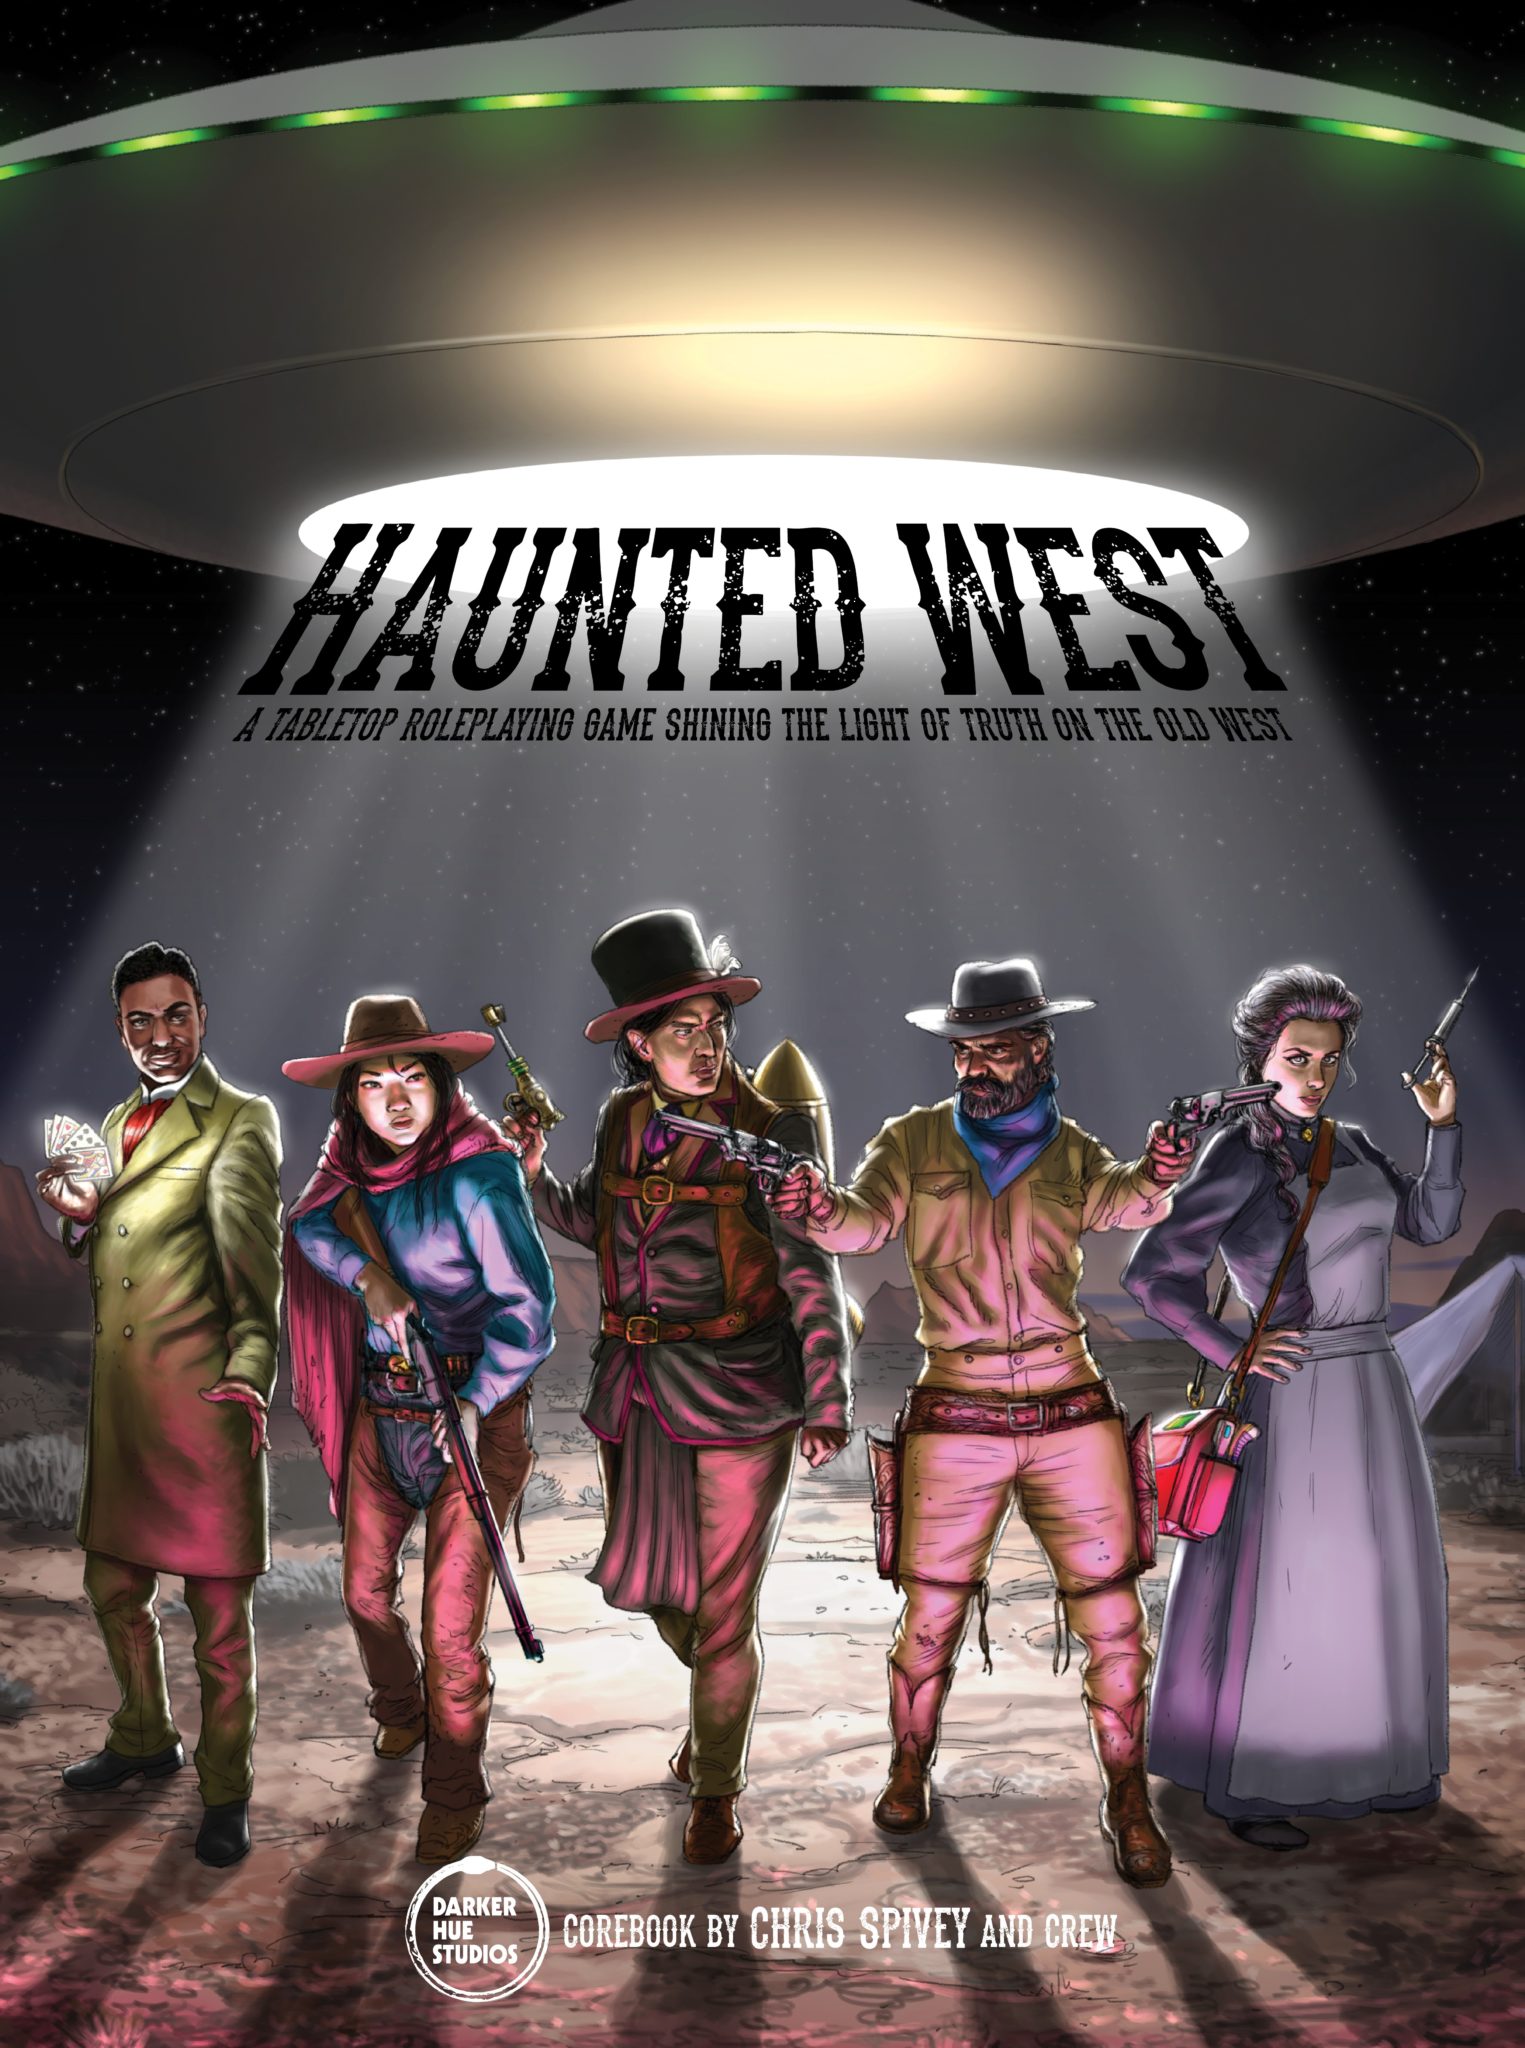 Haunted West Core Book Art